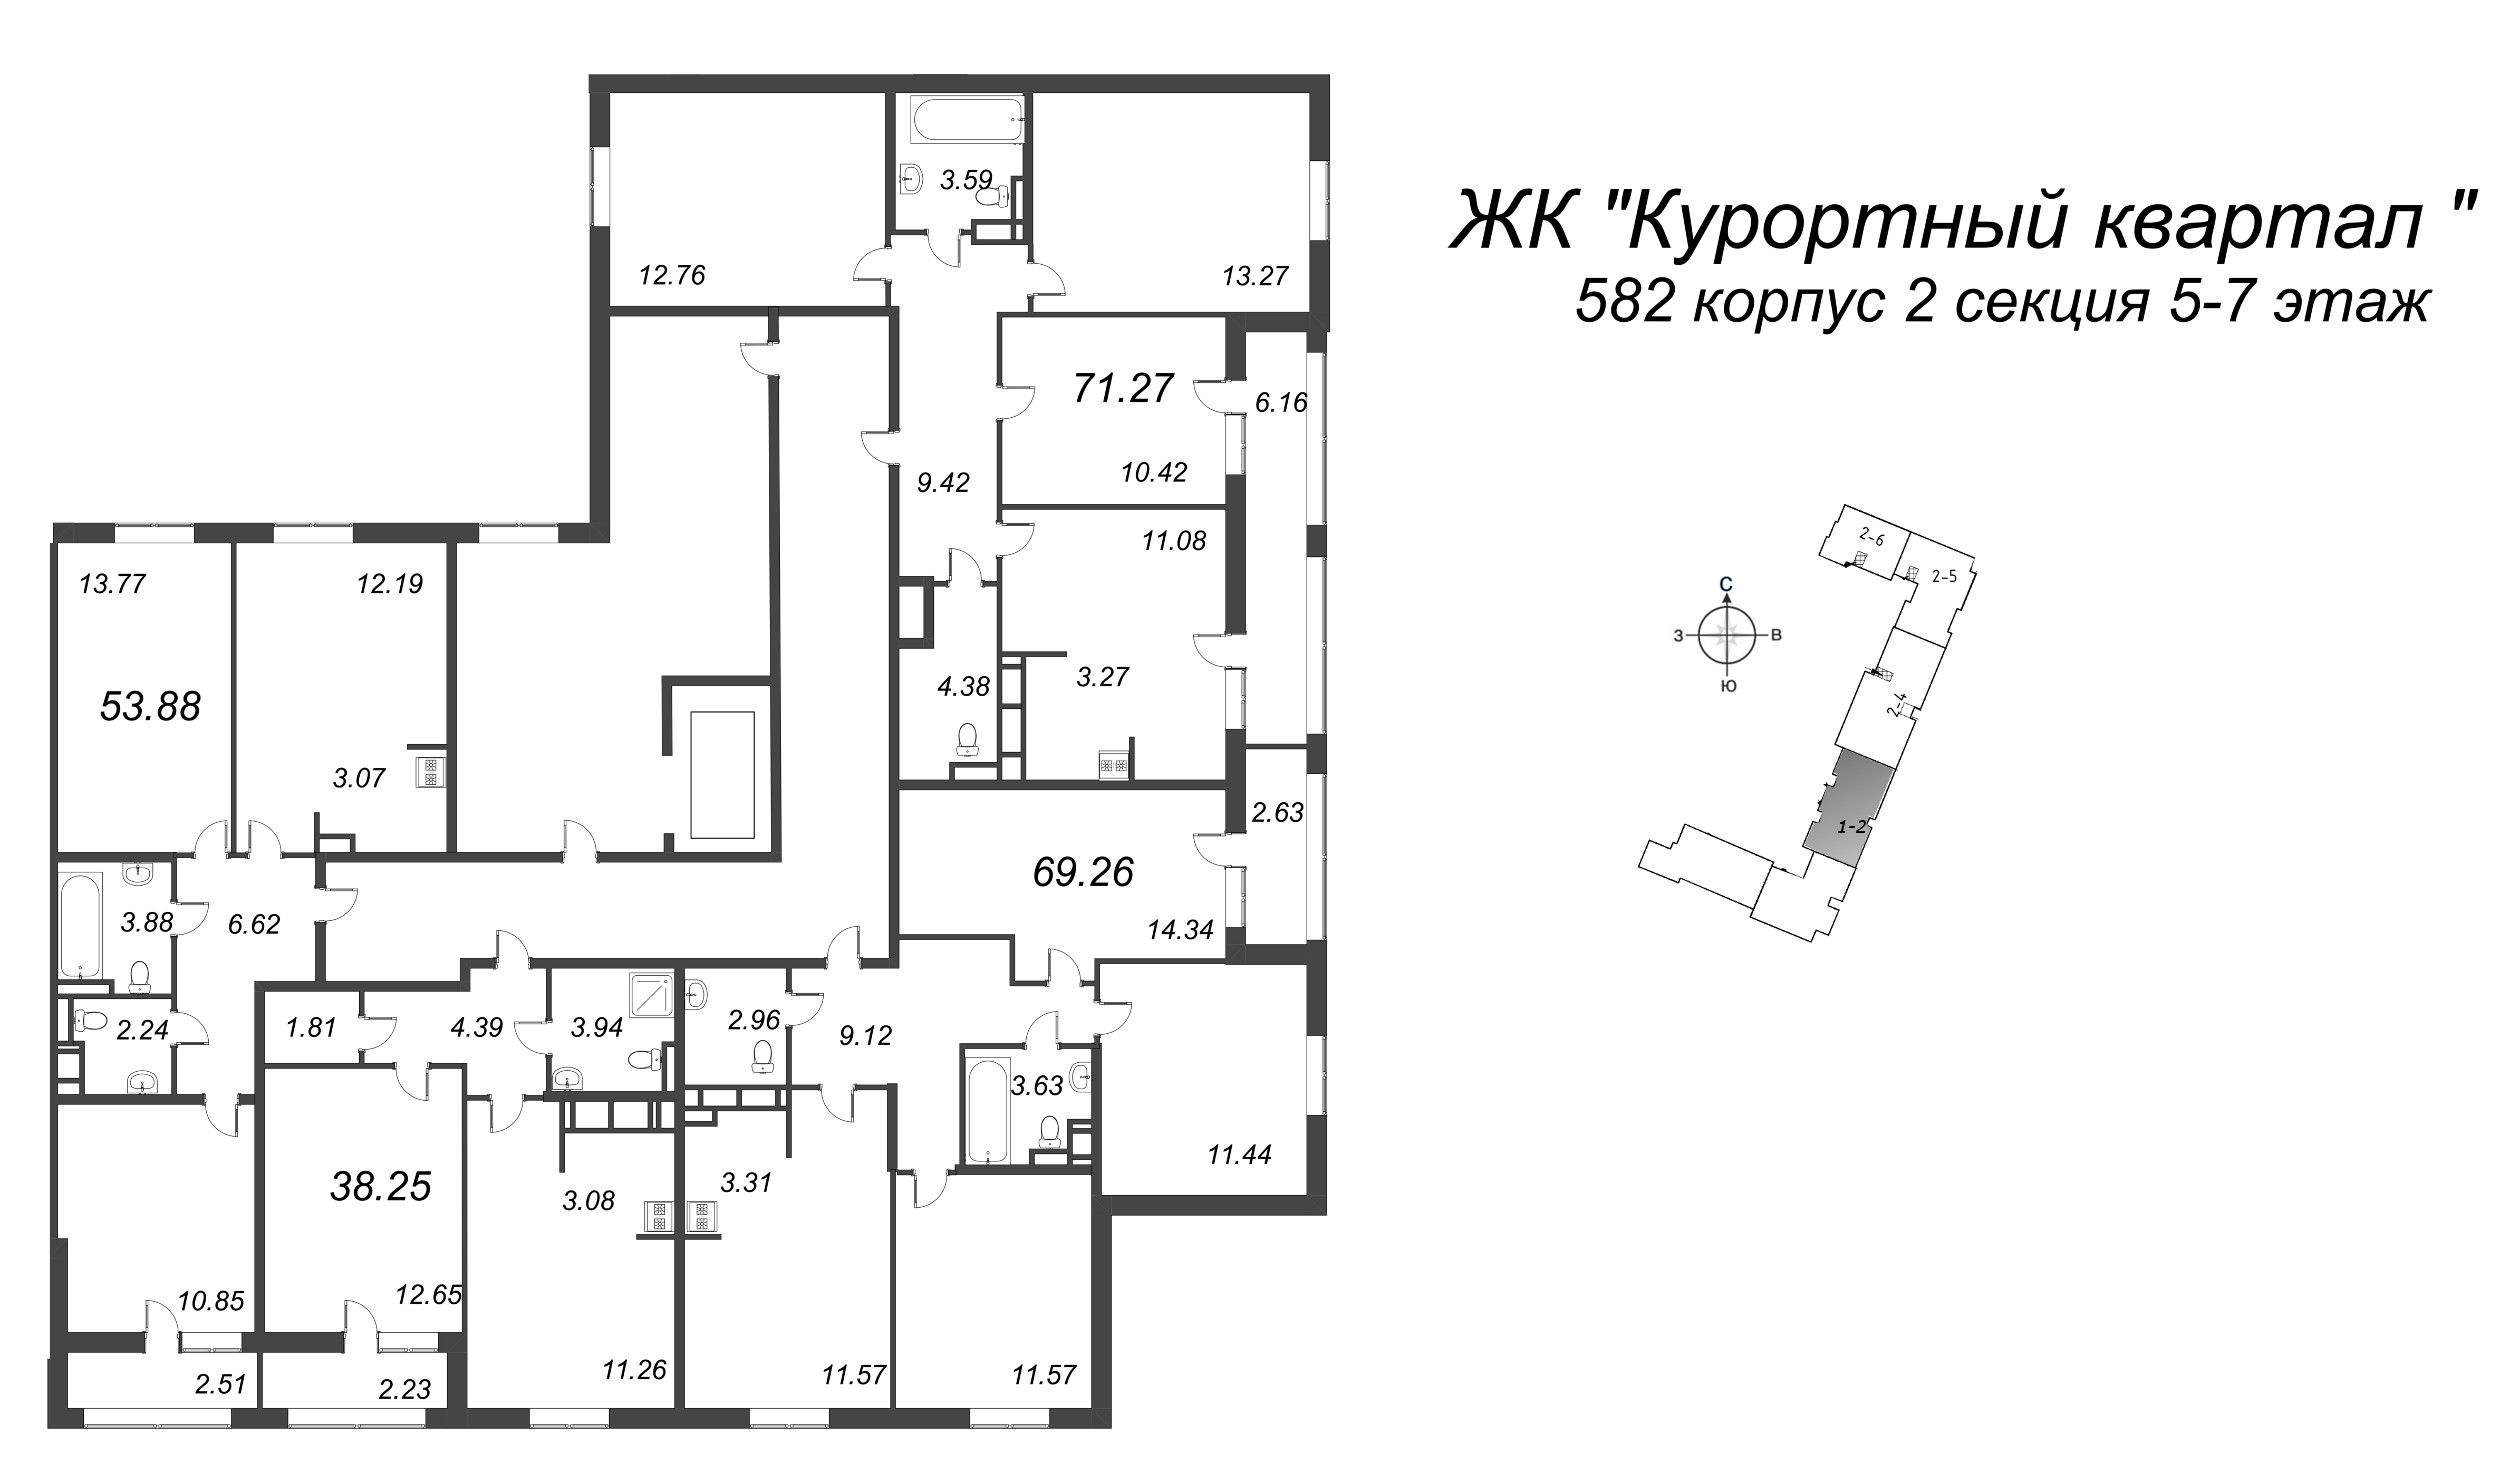 3-комнатная (Евро) квартира, 53.88 м² - планировка этажа